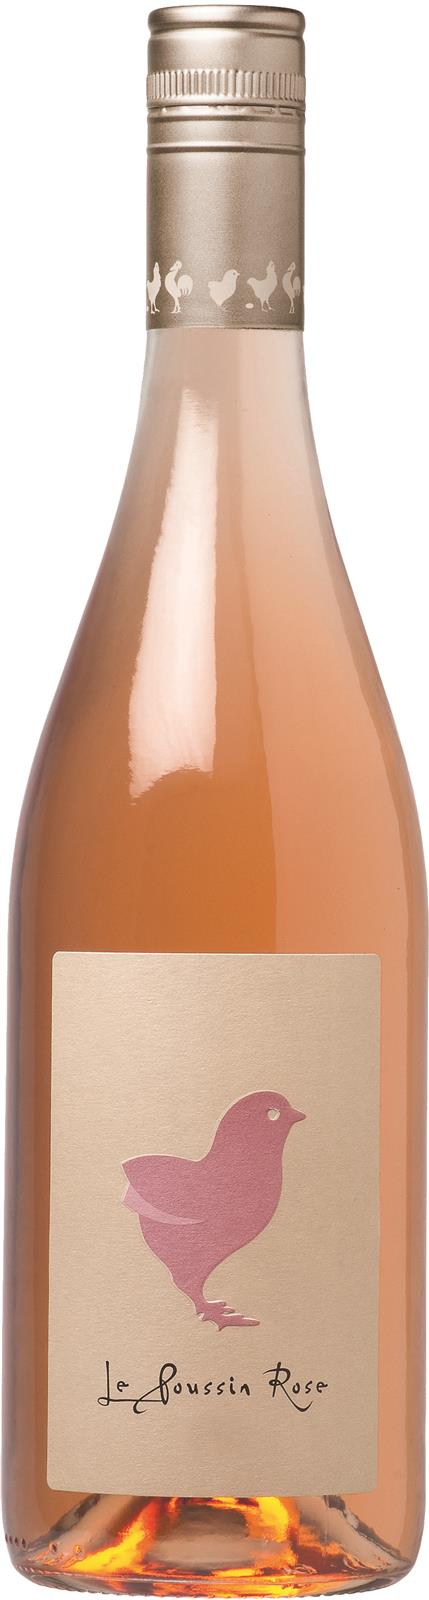 Саша Лишин вино. Вино розовое сухое. Вино Ле Классик де Вантенак Розе розовое сухое. Французское розовое вино сухое. Совиньон сухое розовое